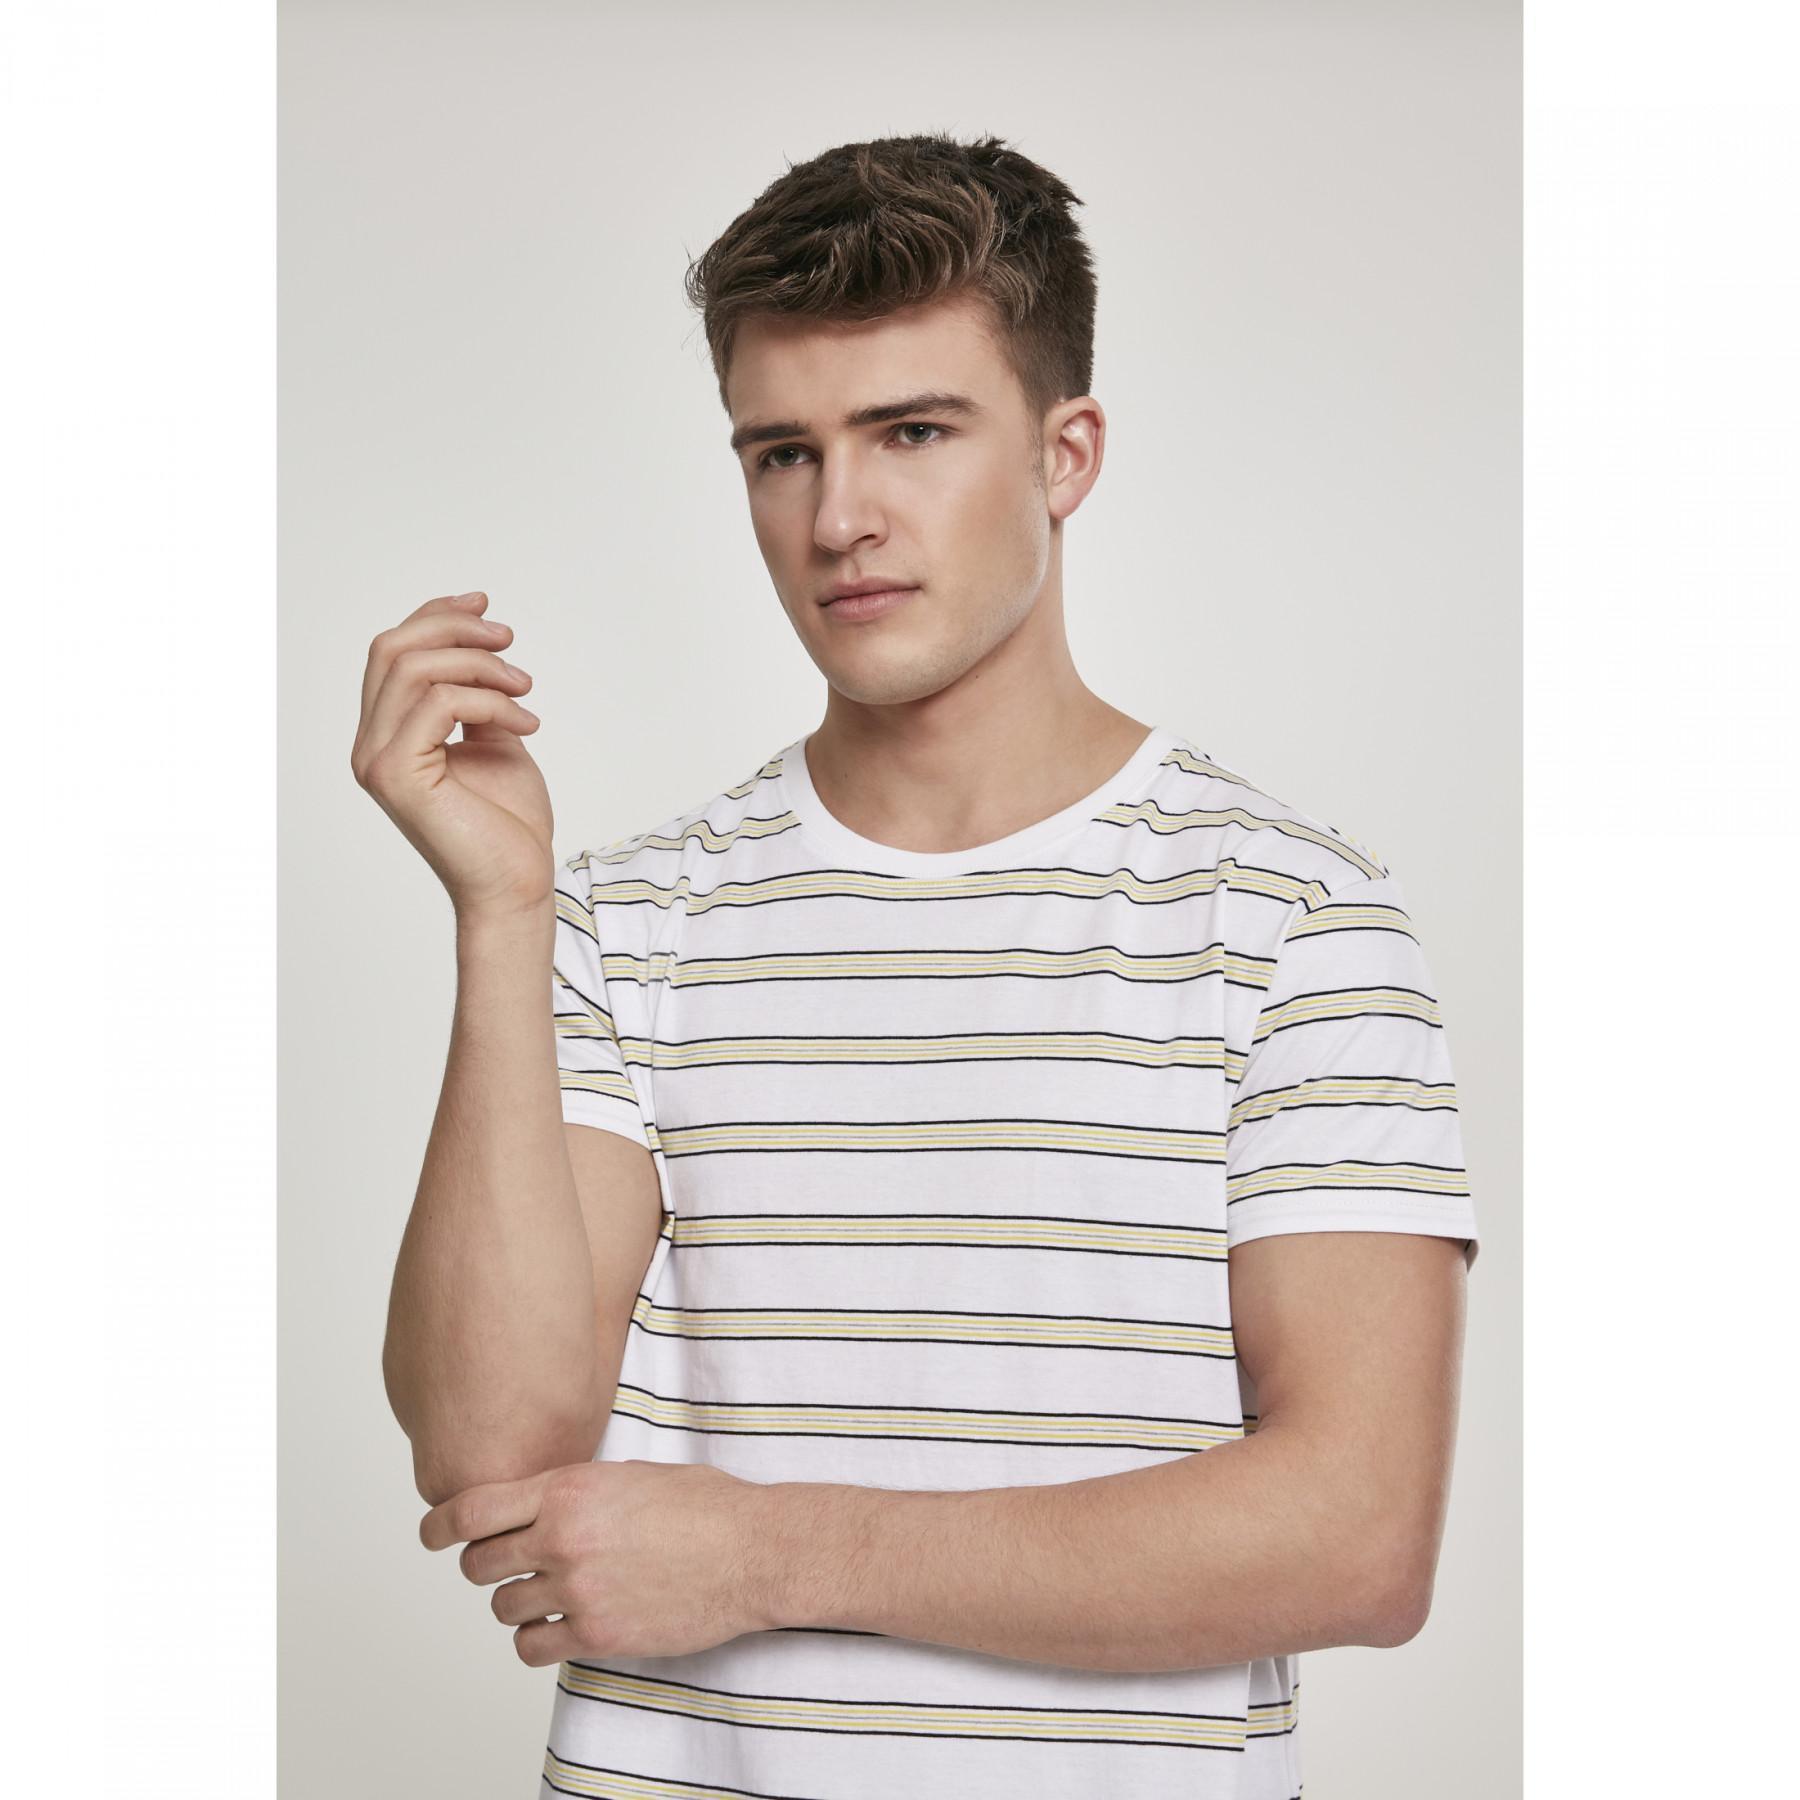 Urban Classic Stripe T-shirt